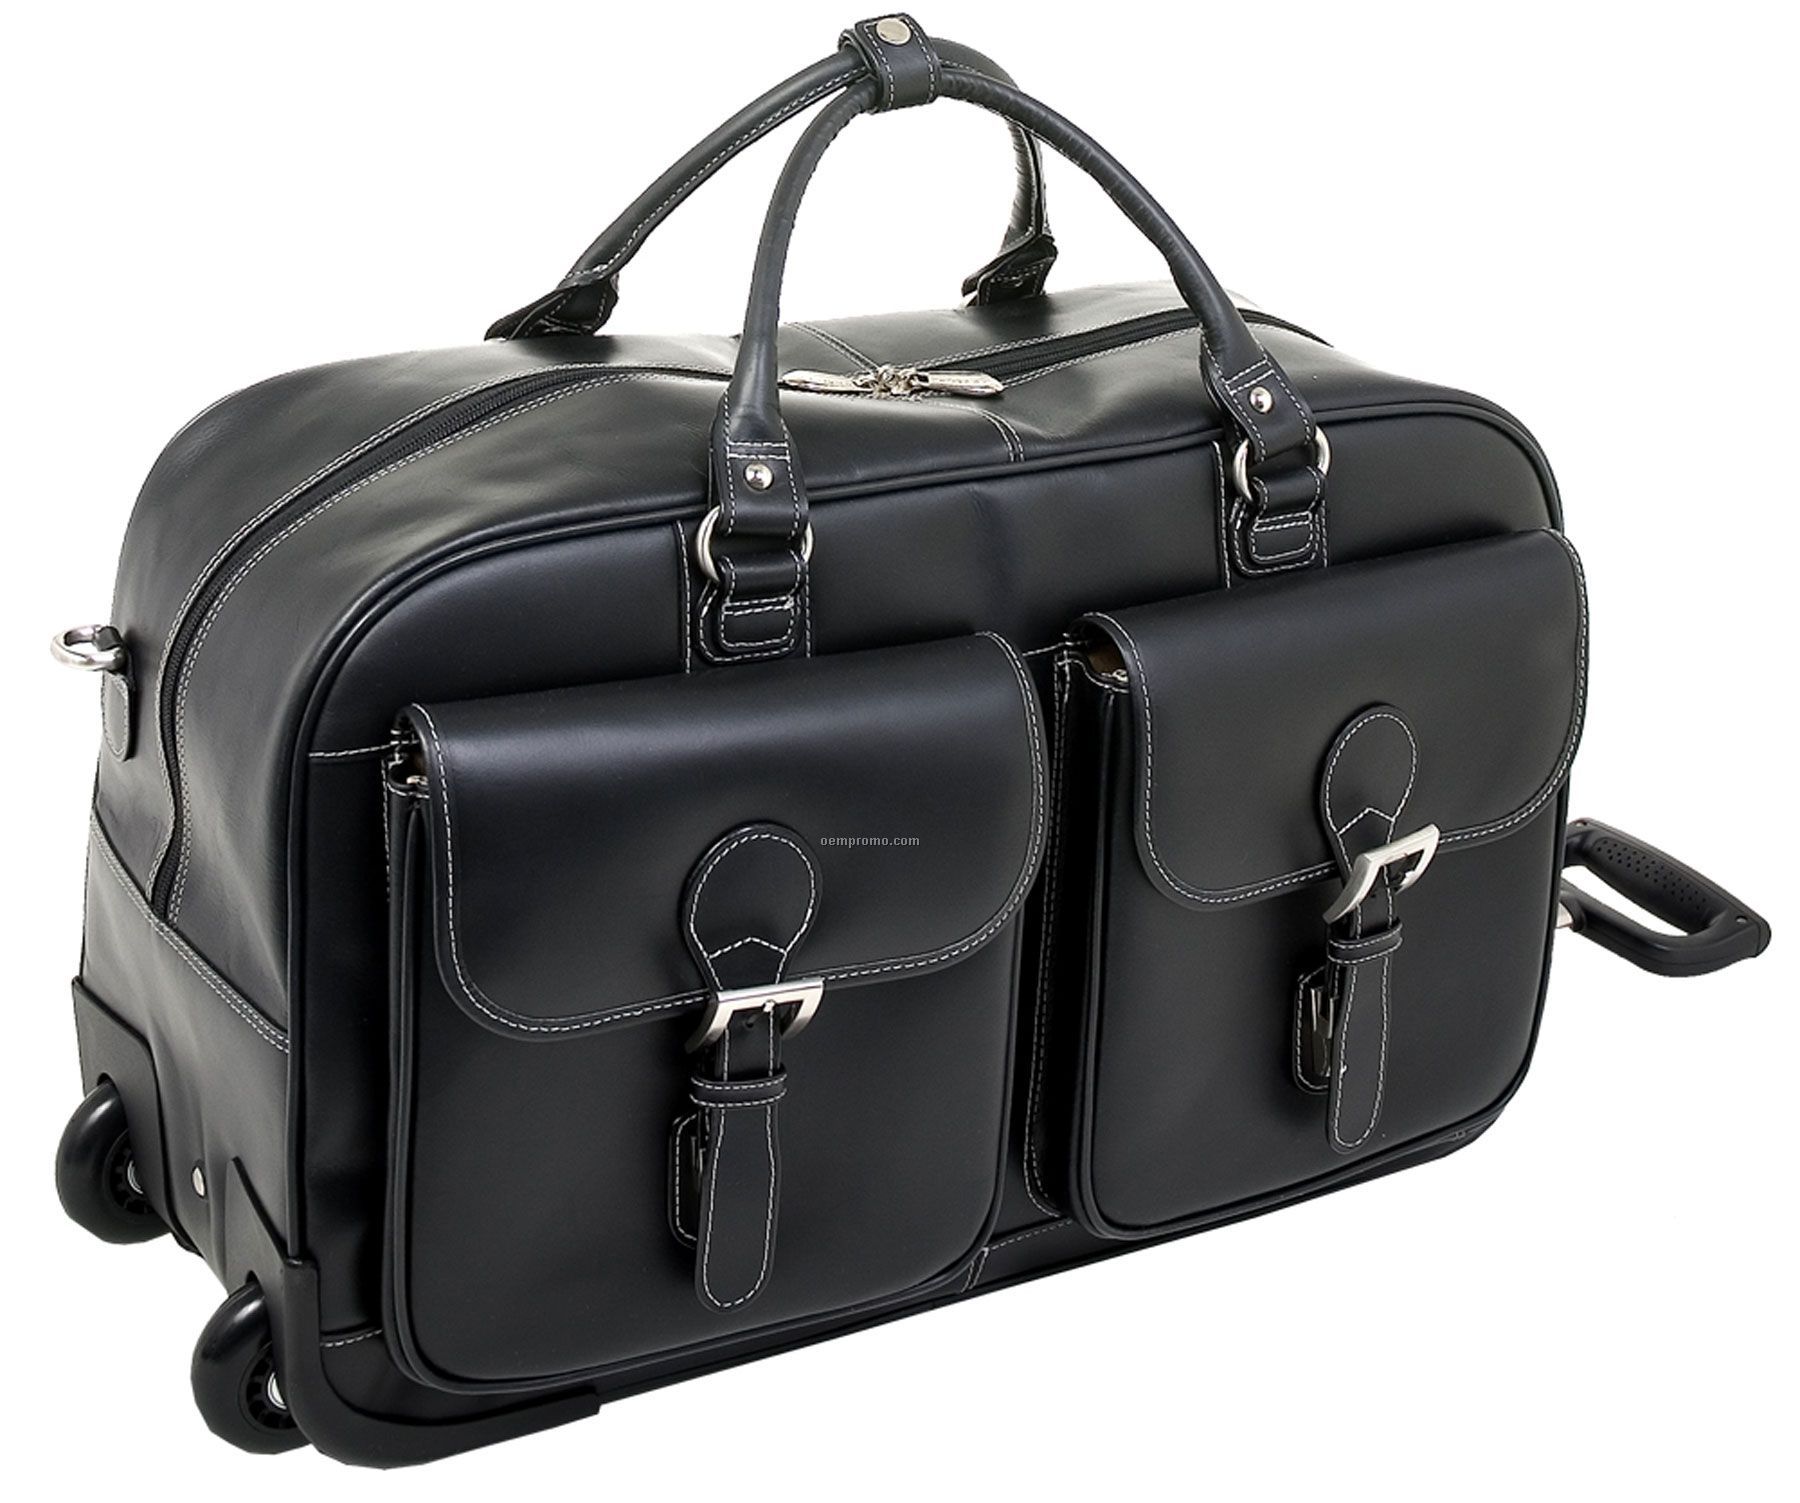 Discovolo Leather Wheeled Duffel Bag - Black